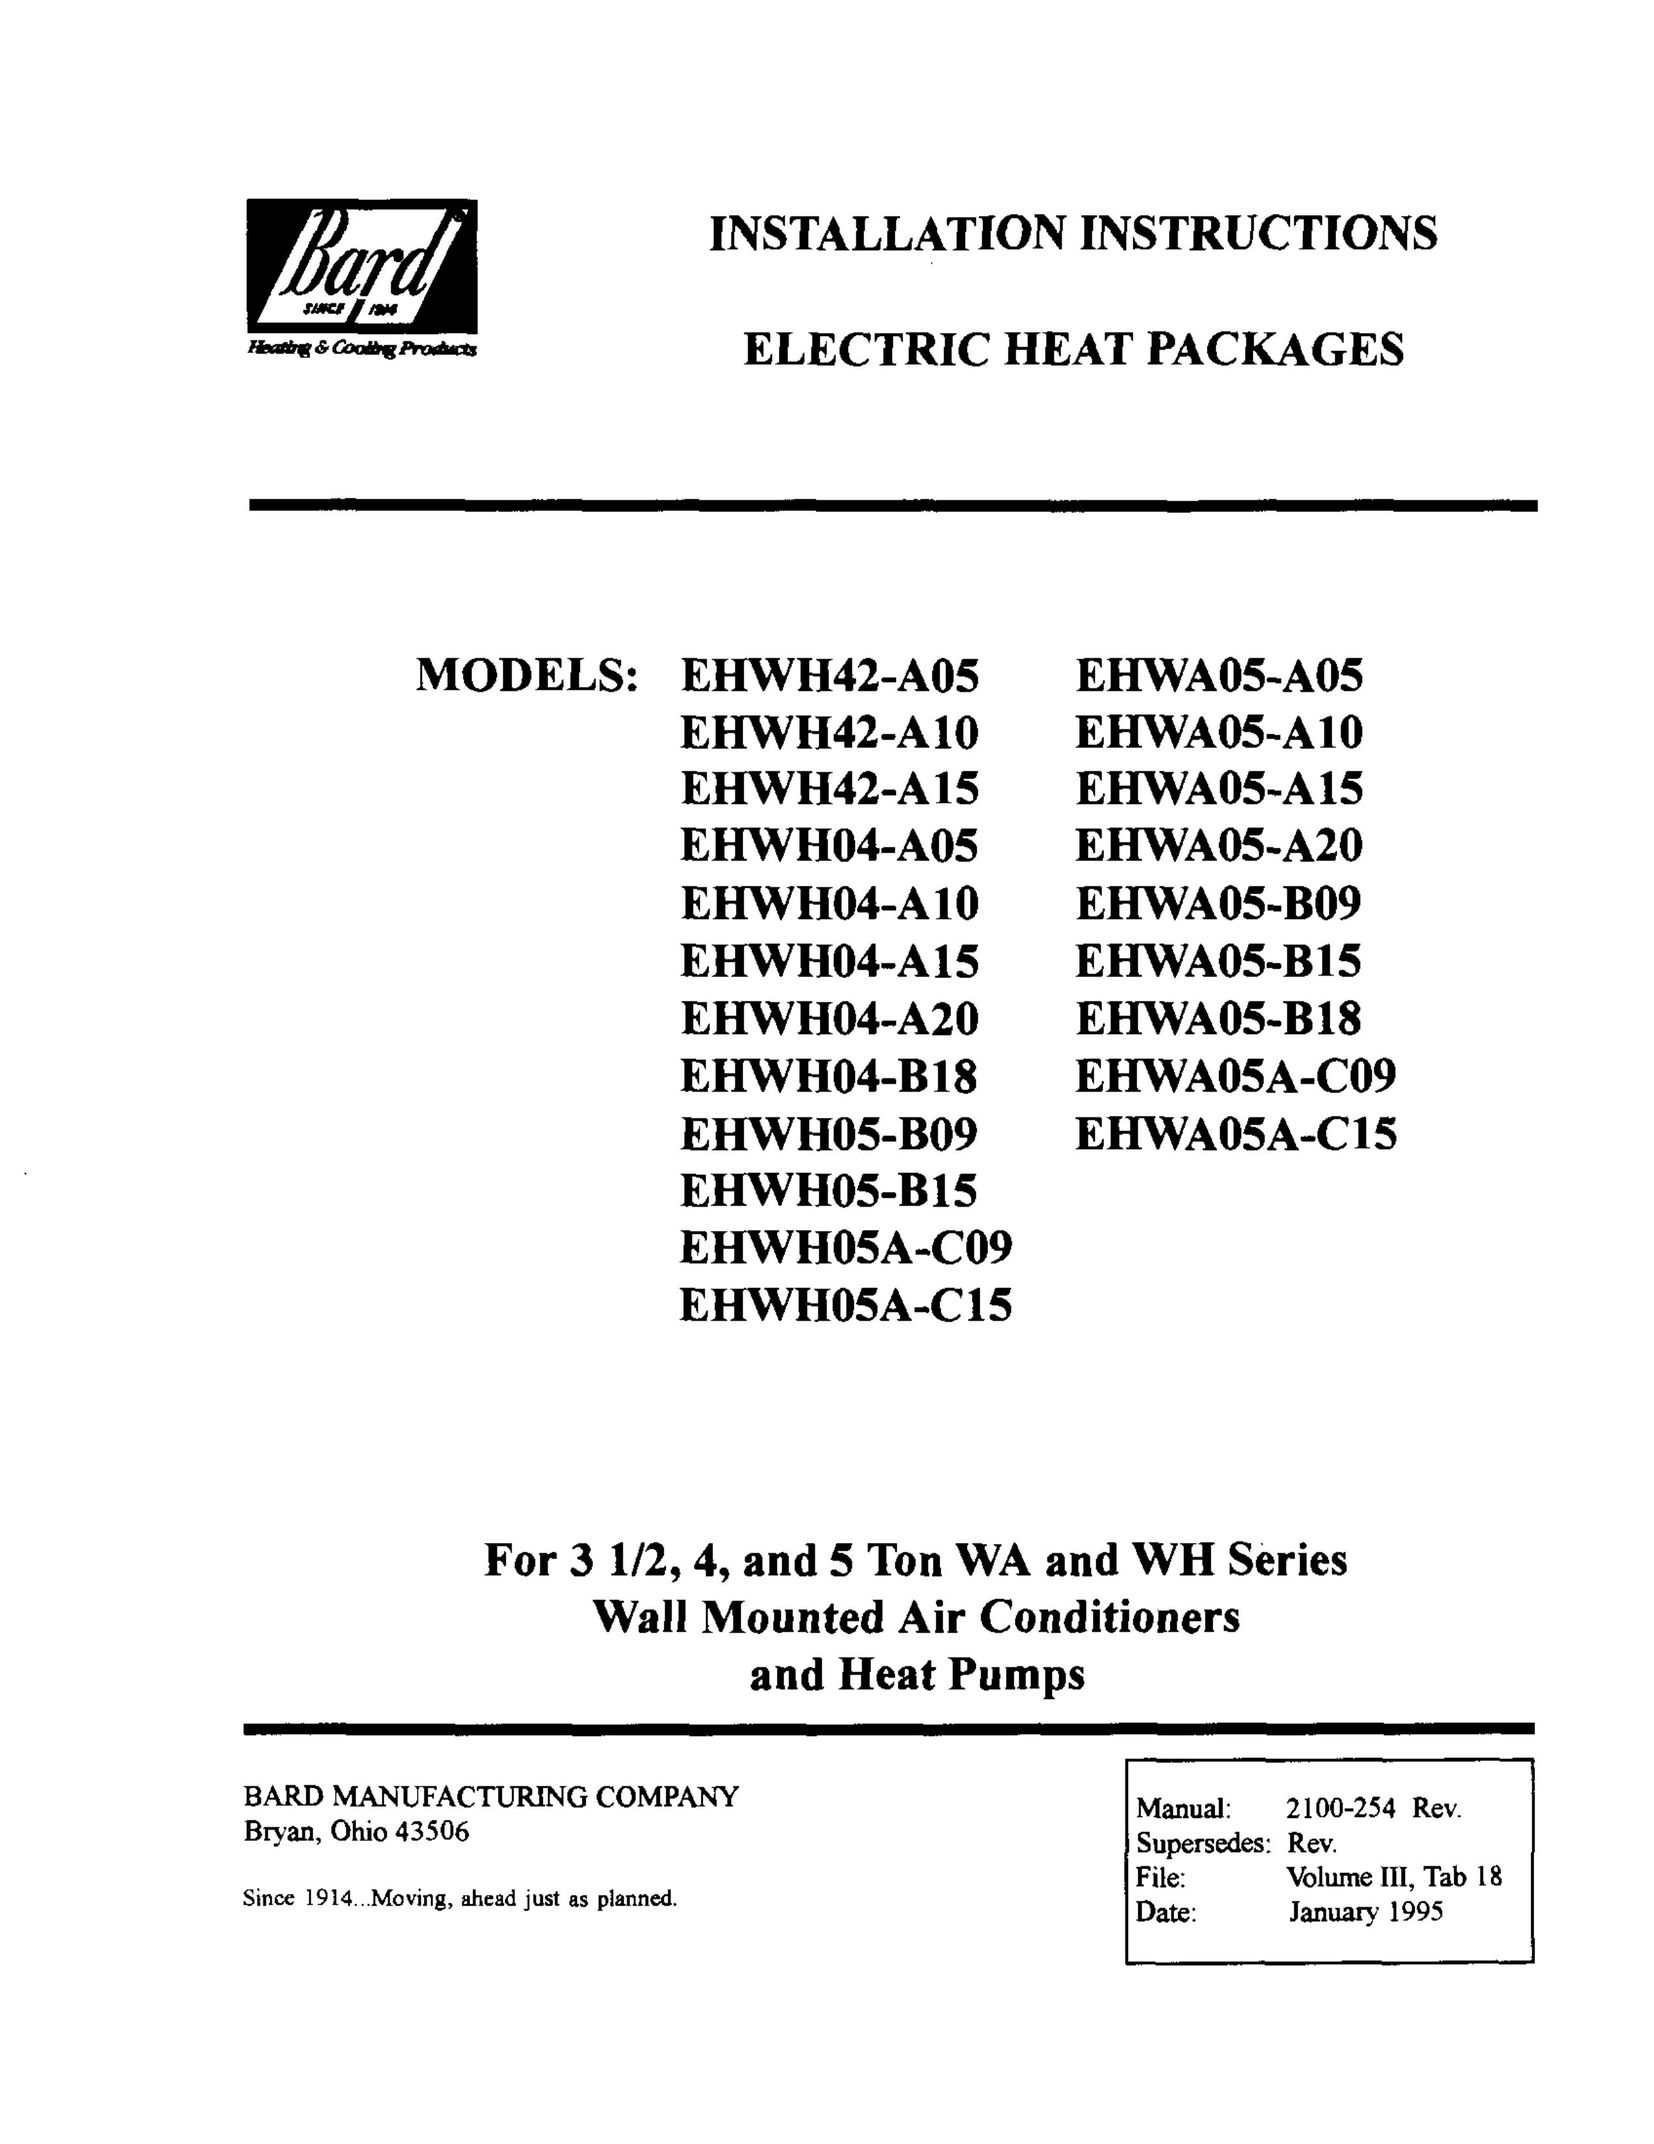 Bard EHWHA05-B15 Heat Gun User Manual